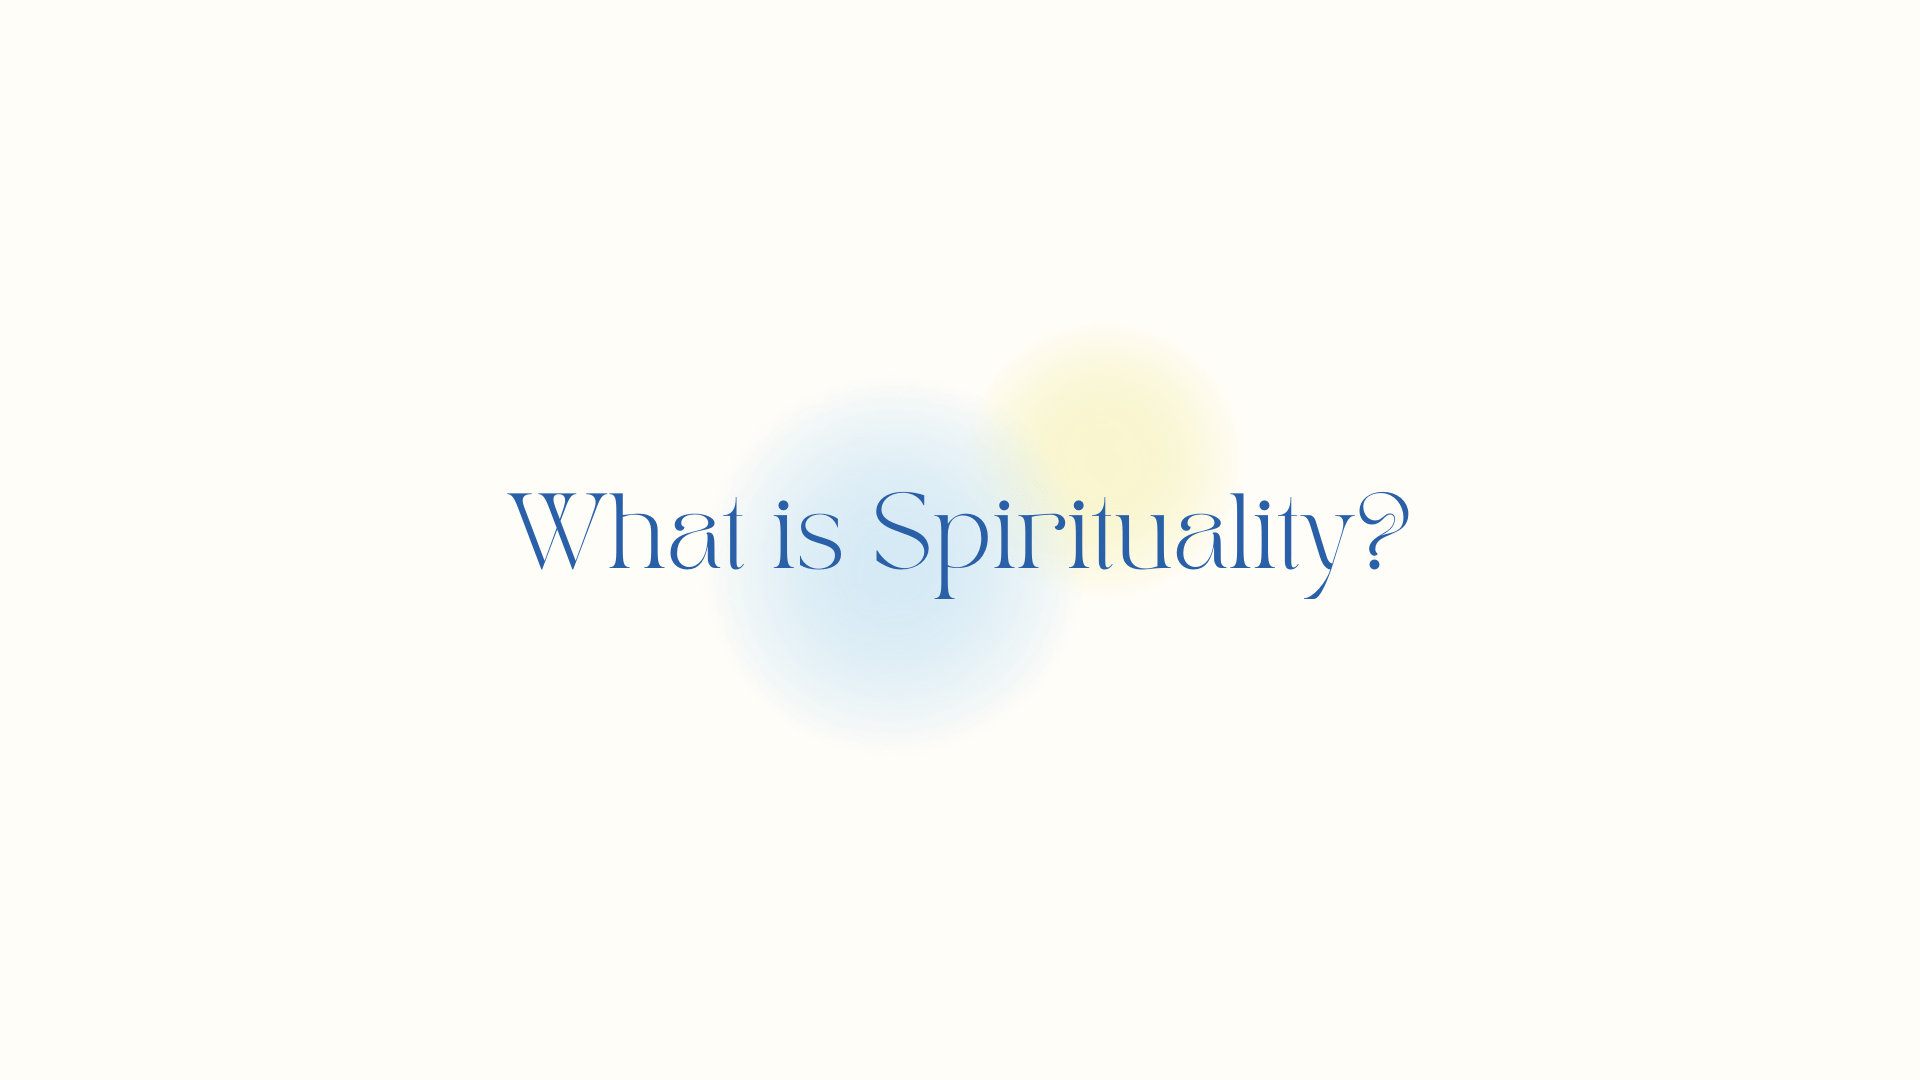 spiritual awakening meaning AND what is spirituality